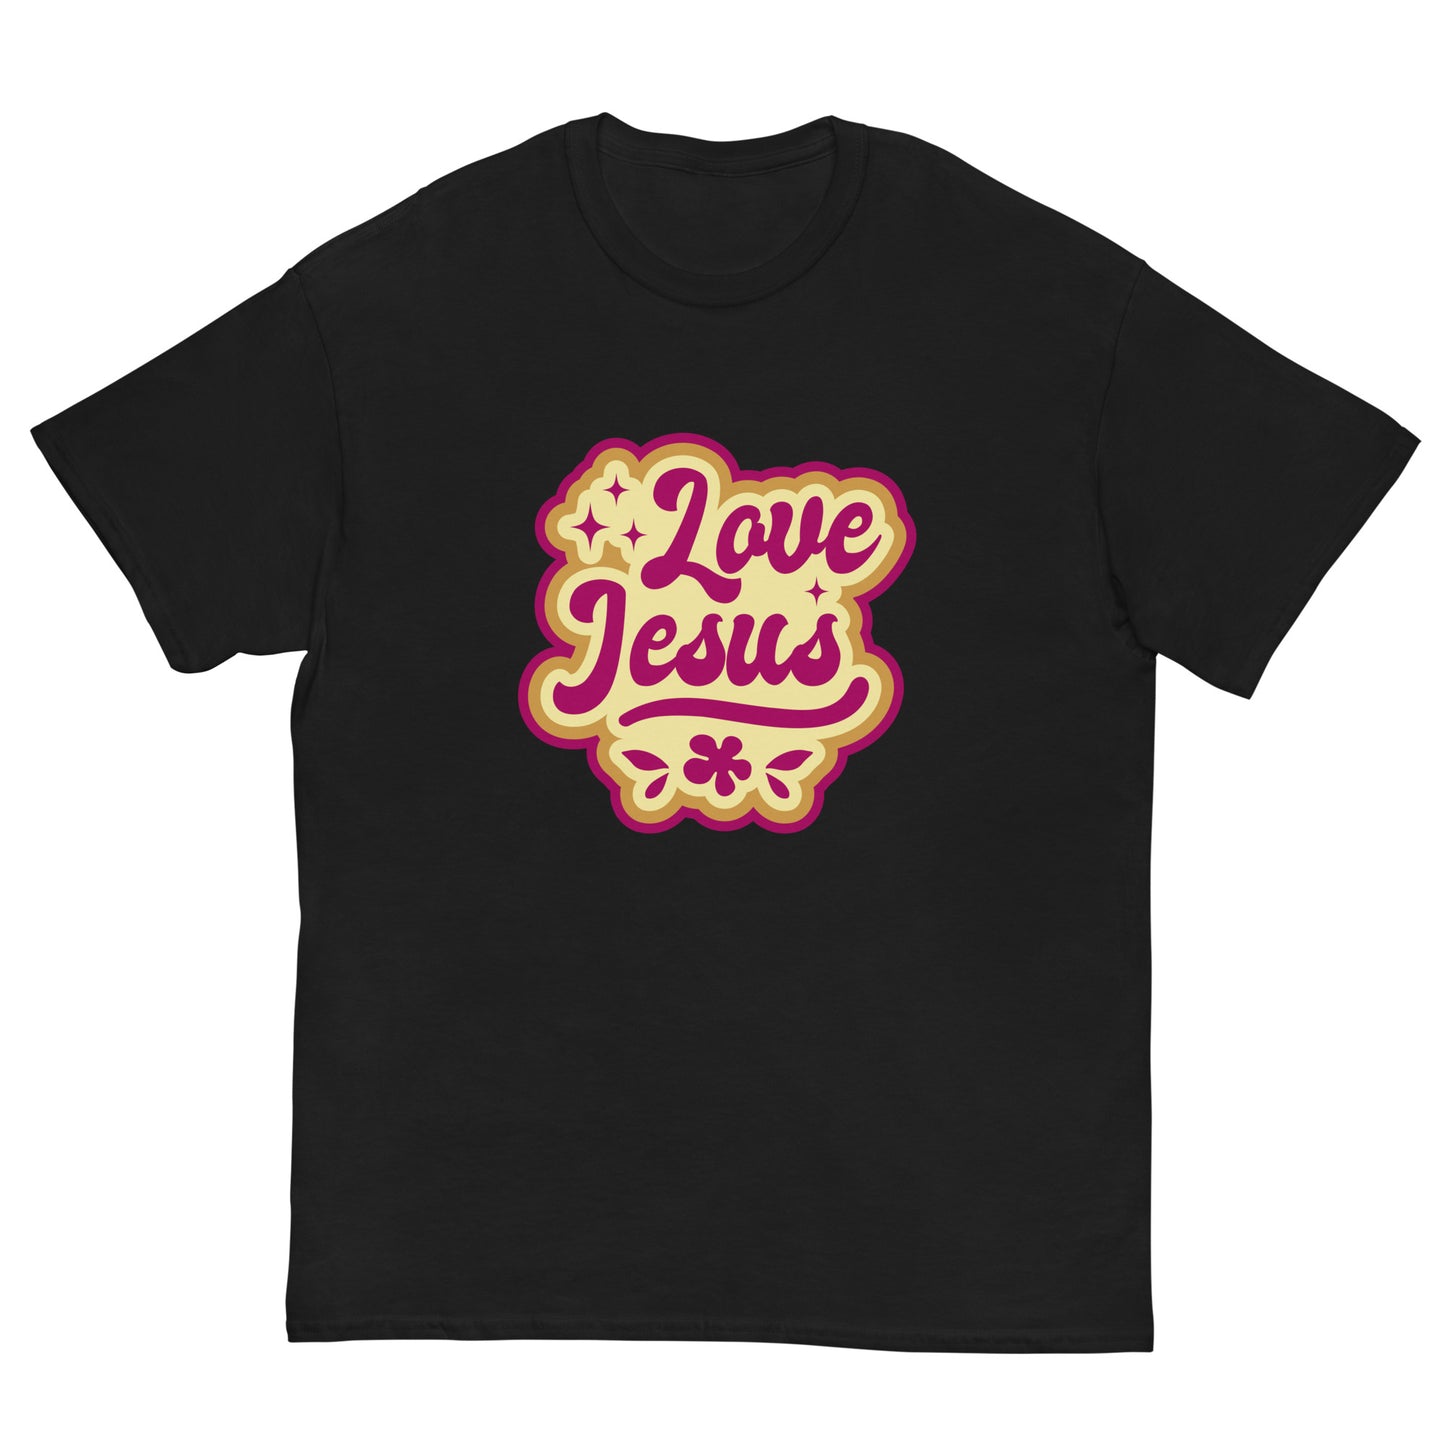 Love Jesus (Front)